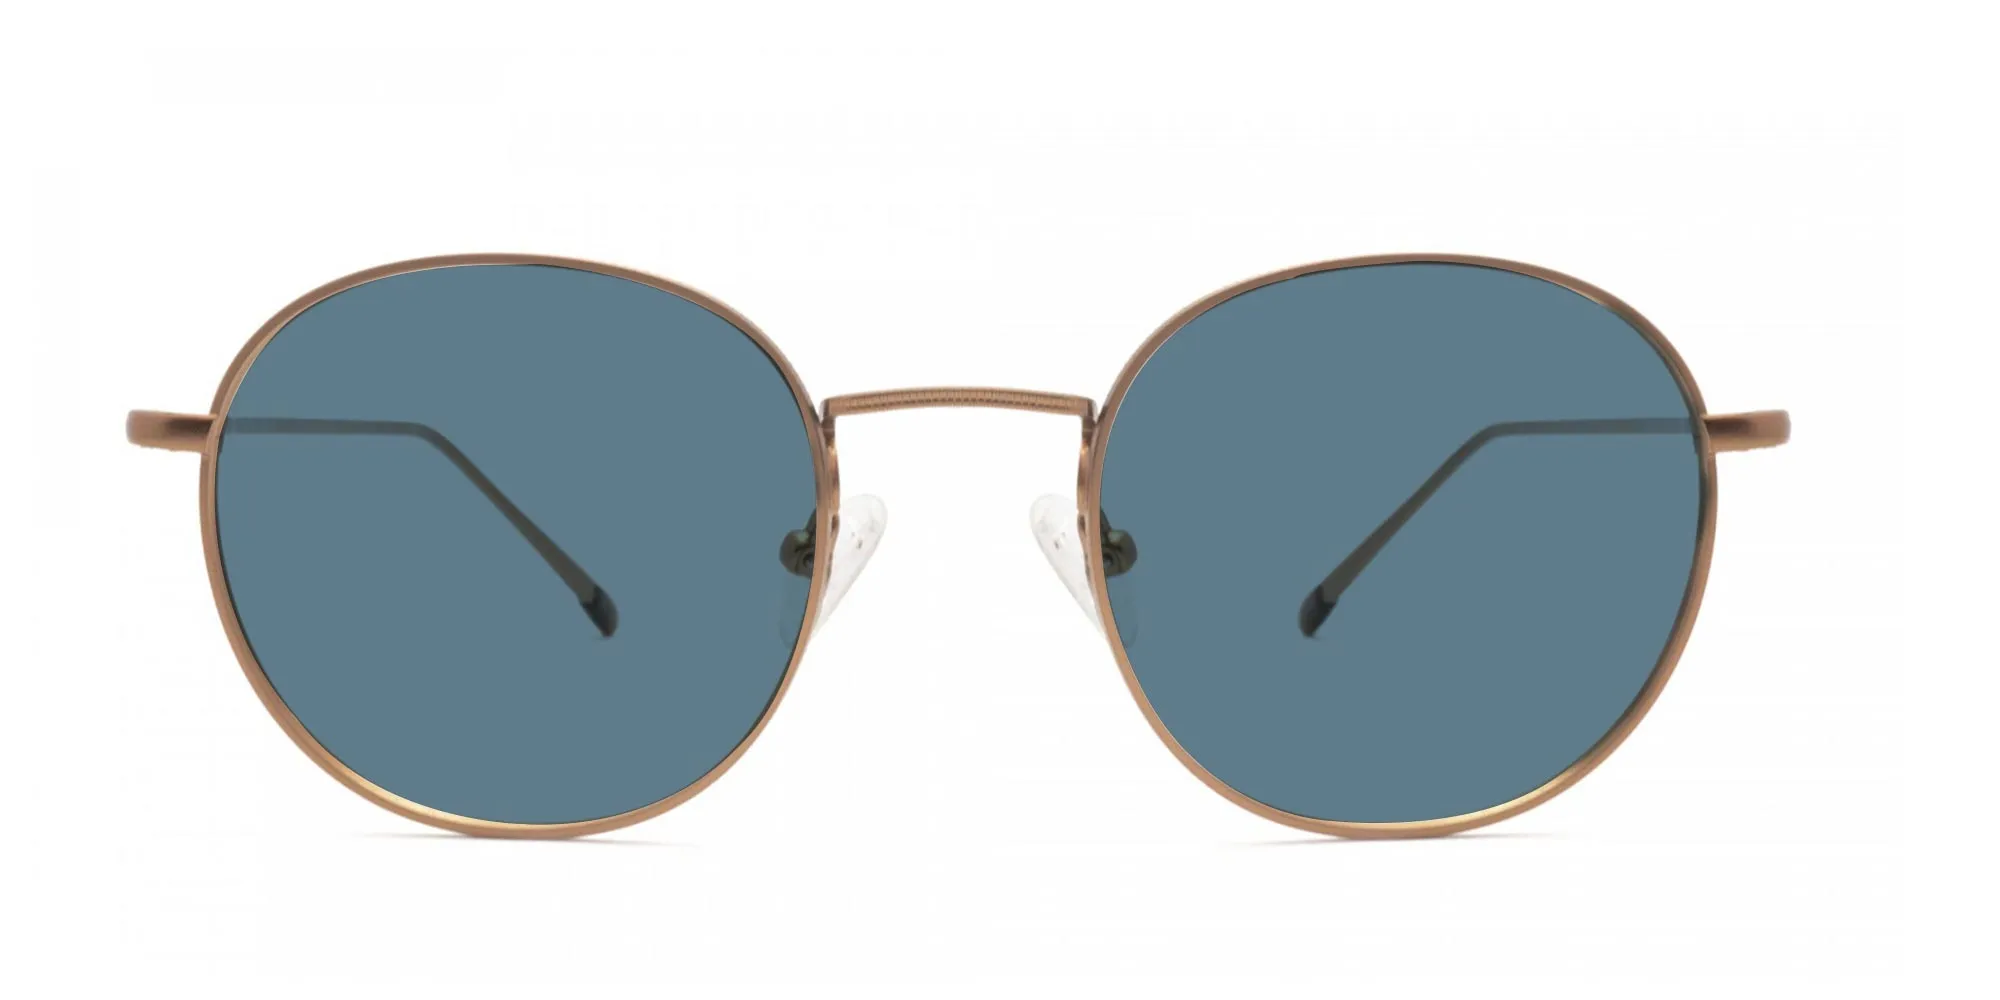 LYMM 5-S1 - Round Frame Blue Tint Sunglasses | Specscart.®